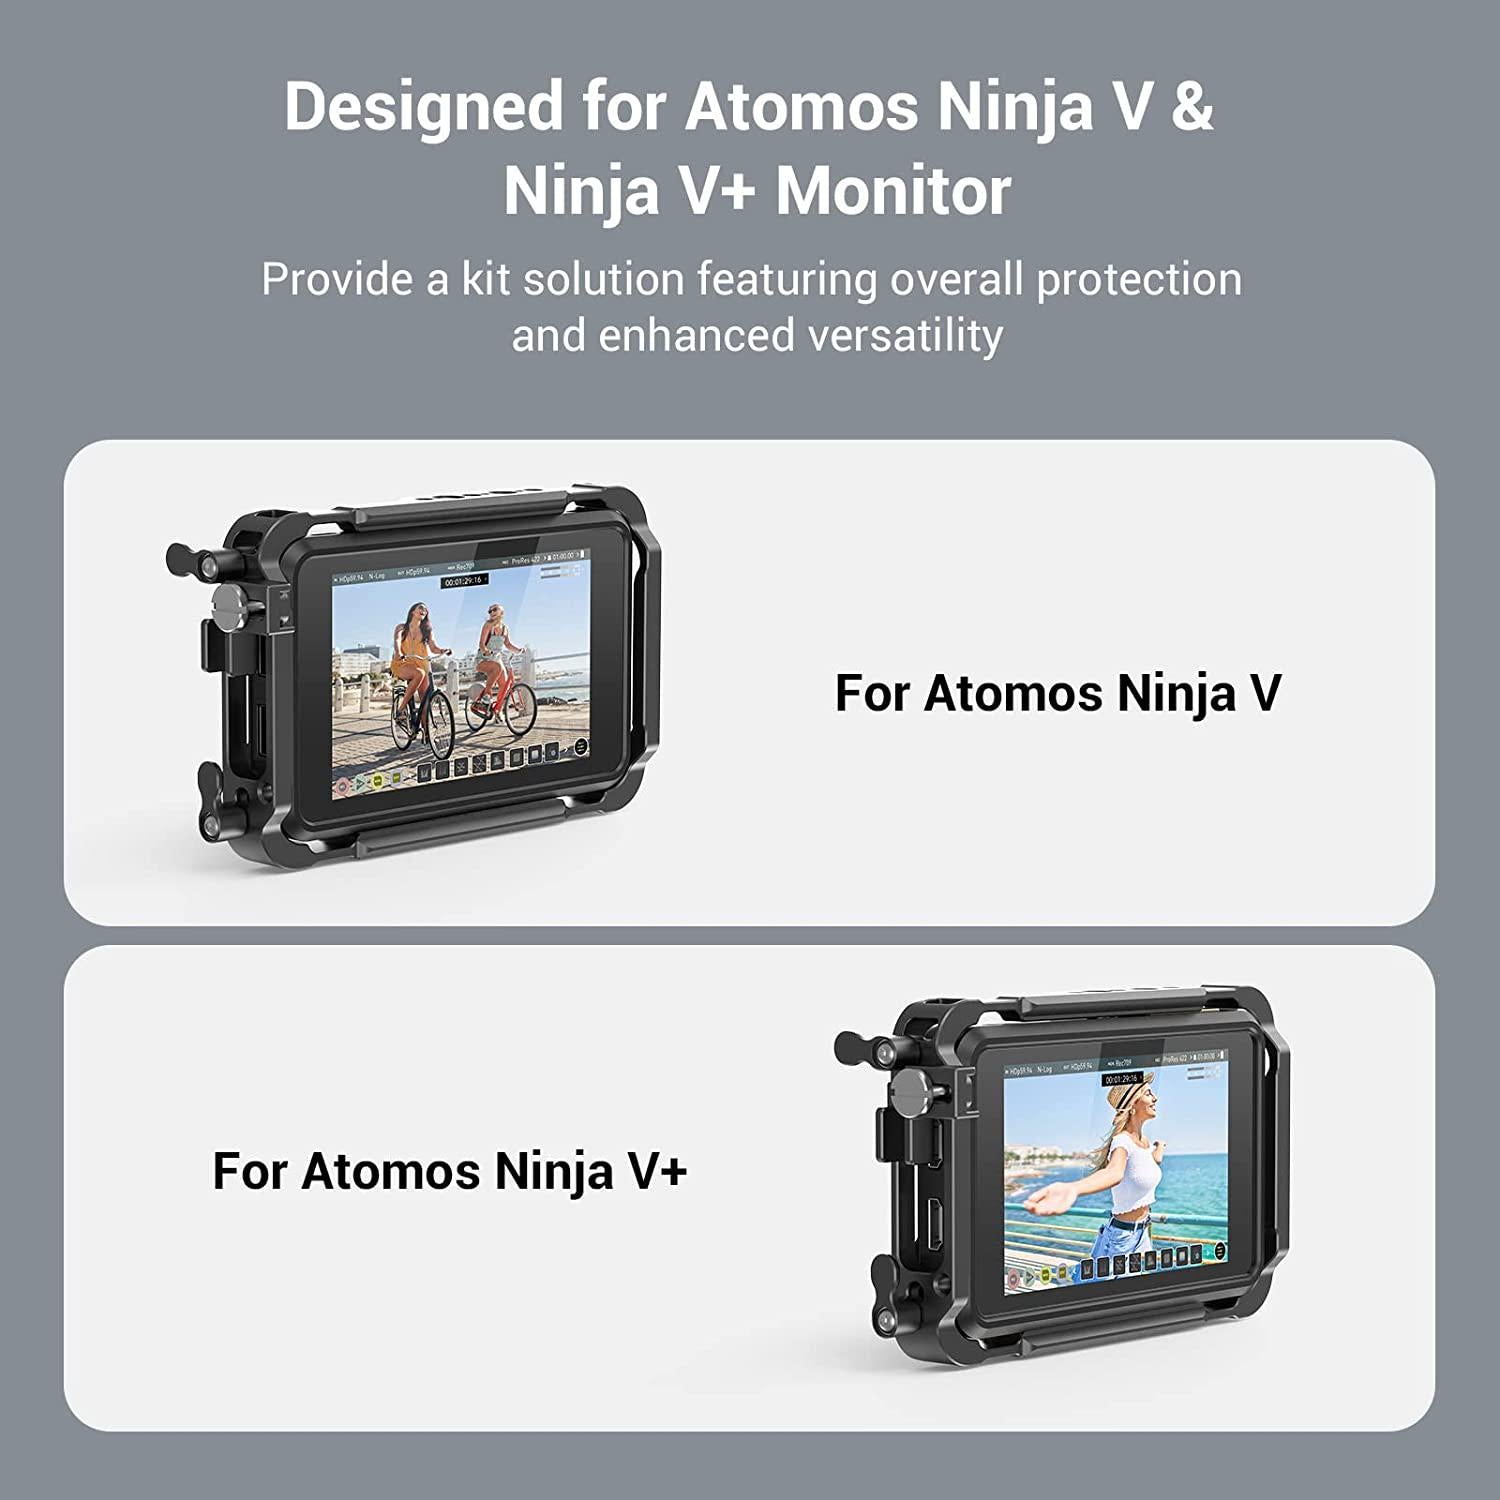 SMALLRIG, SMALLRIG Cage Kit for Atomos NinjaÂ V/NinjaÂ V+, with NATO Rail, 1/4 -20 Screw, M3 Screw HDMI Cable Clamp, and Sunhood, Fully Protect Camera Monitor - 3788